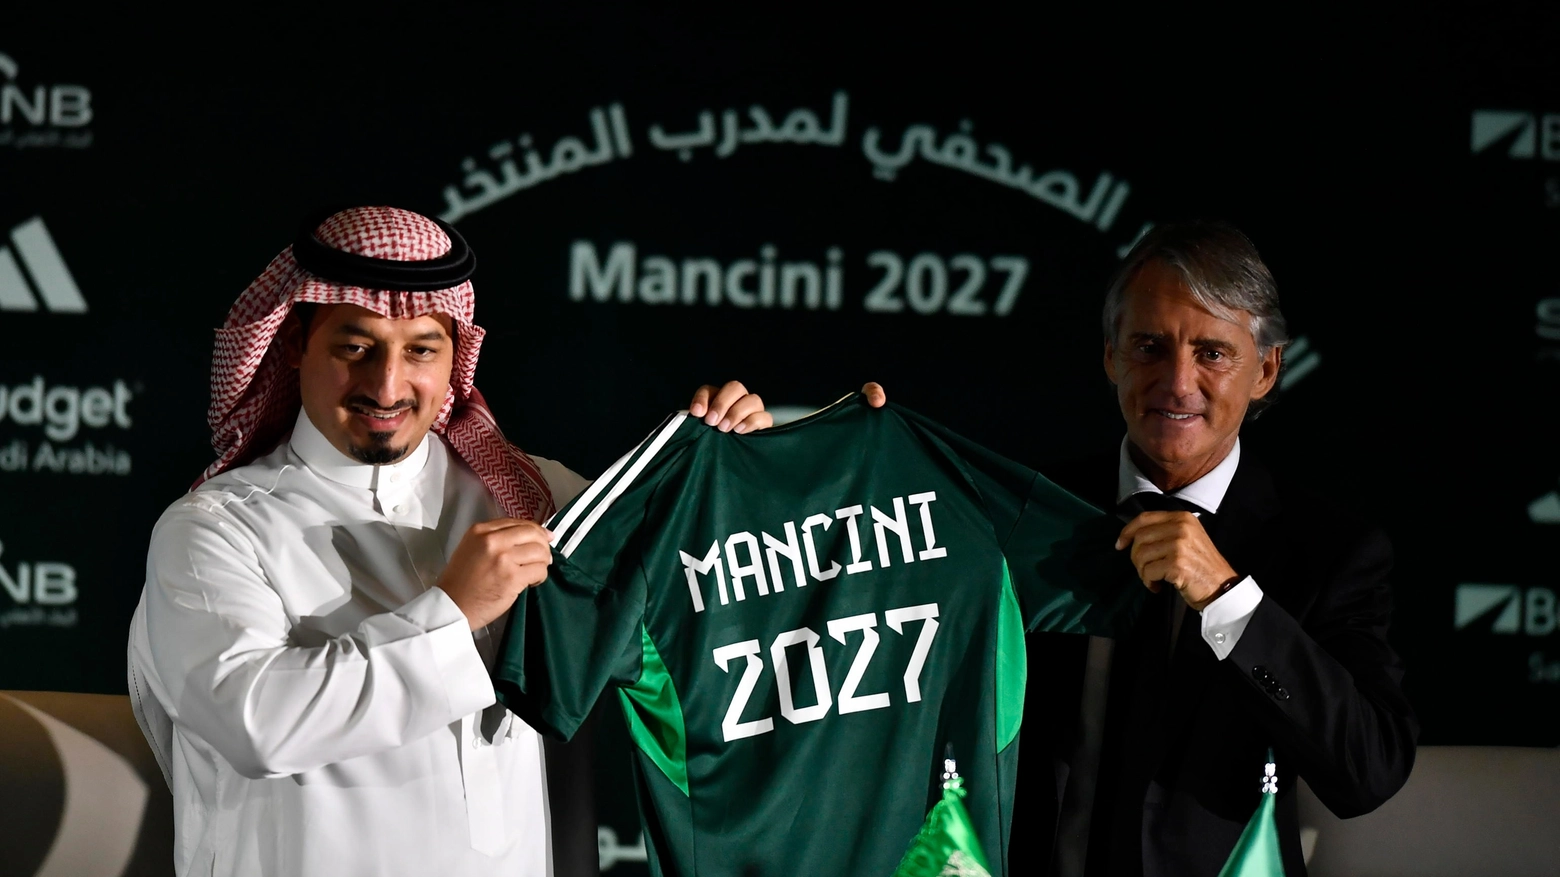 Roberto Mancini insieme a Yasser Al Misehal, presidente della federcalcio araba